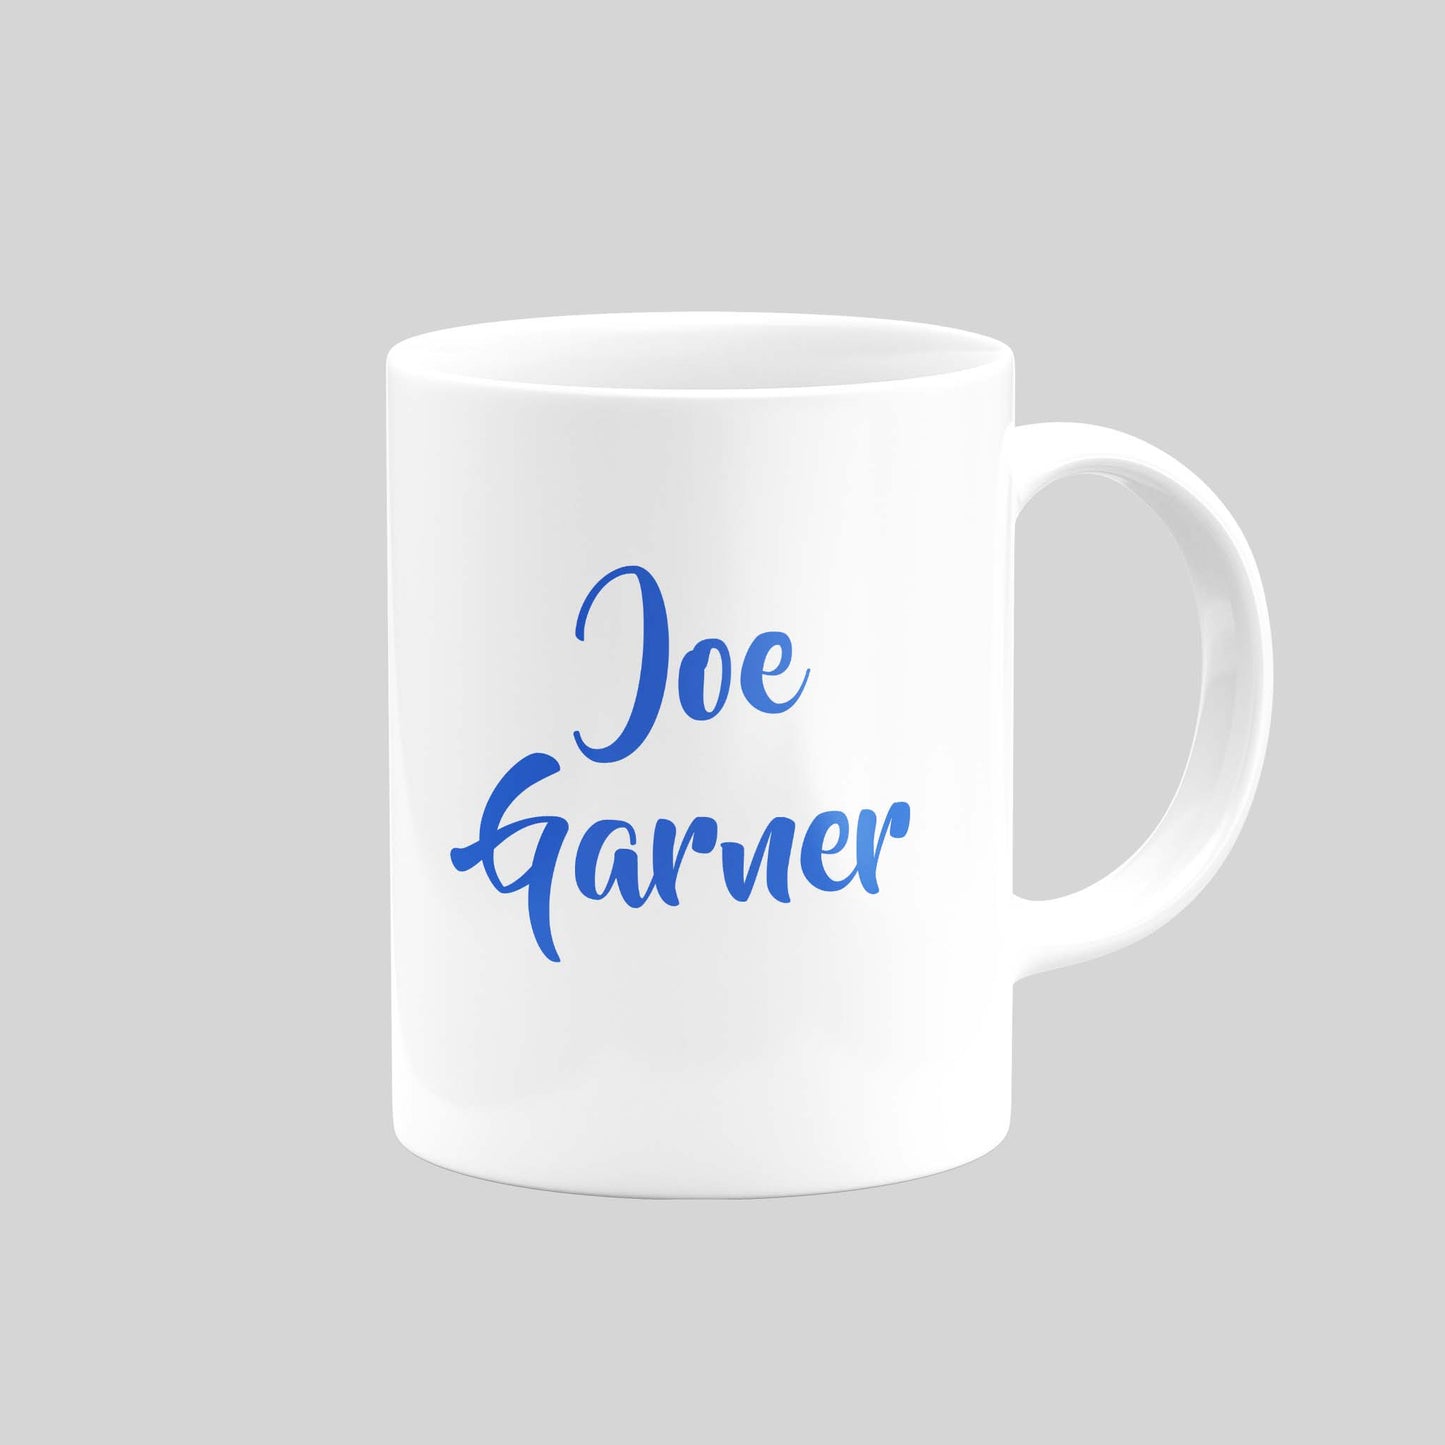 Joe Garner Mug